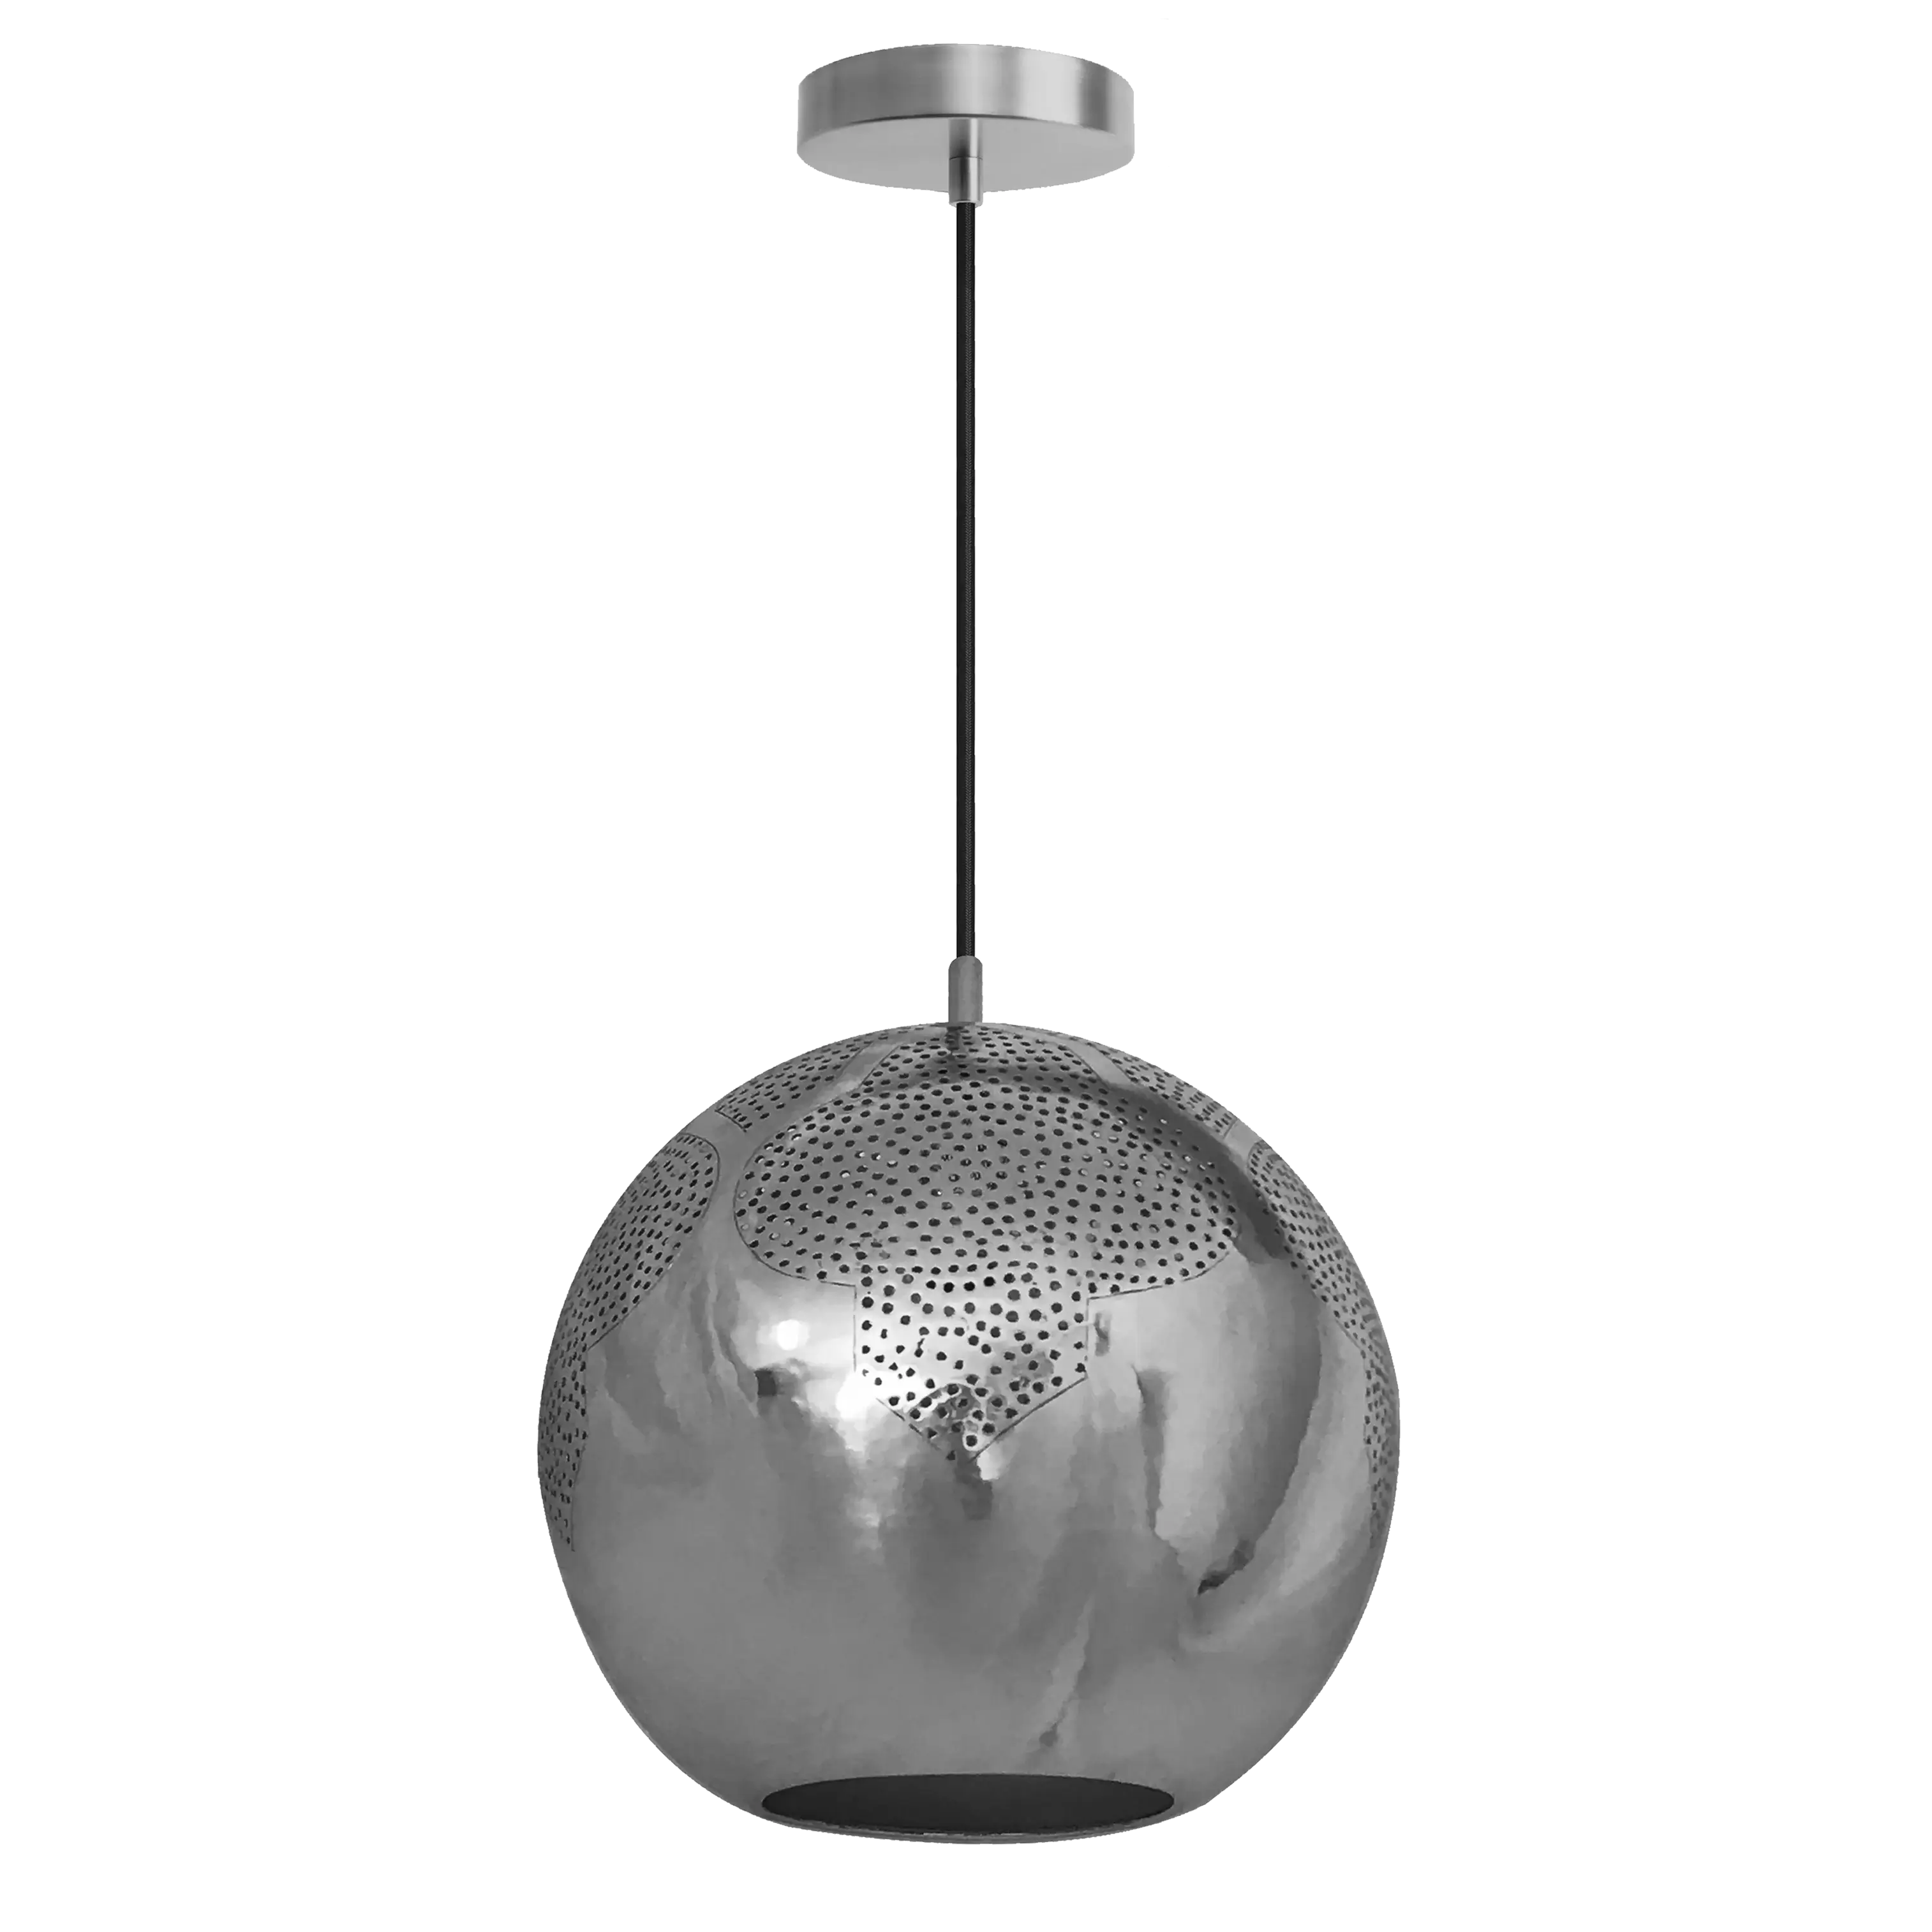 Dounia home Globe Pendant light in nickel silver made of Metal, Model: Najma trellis